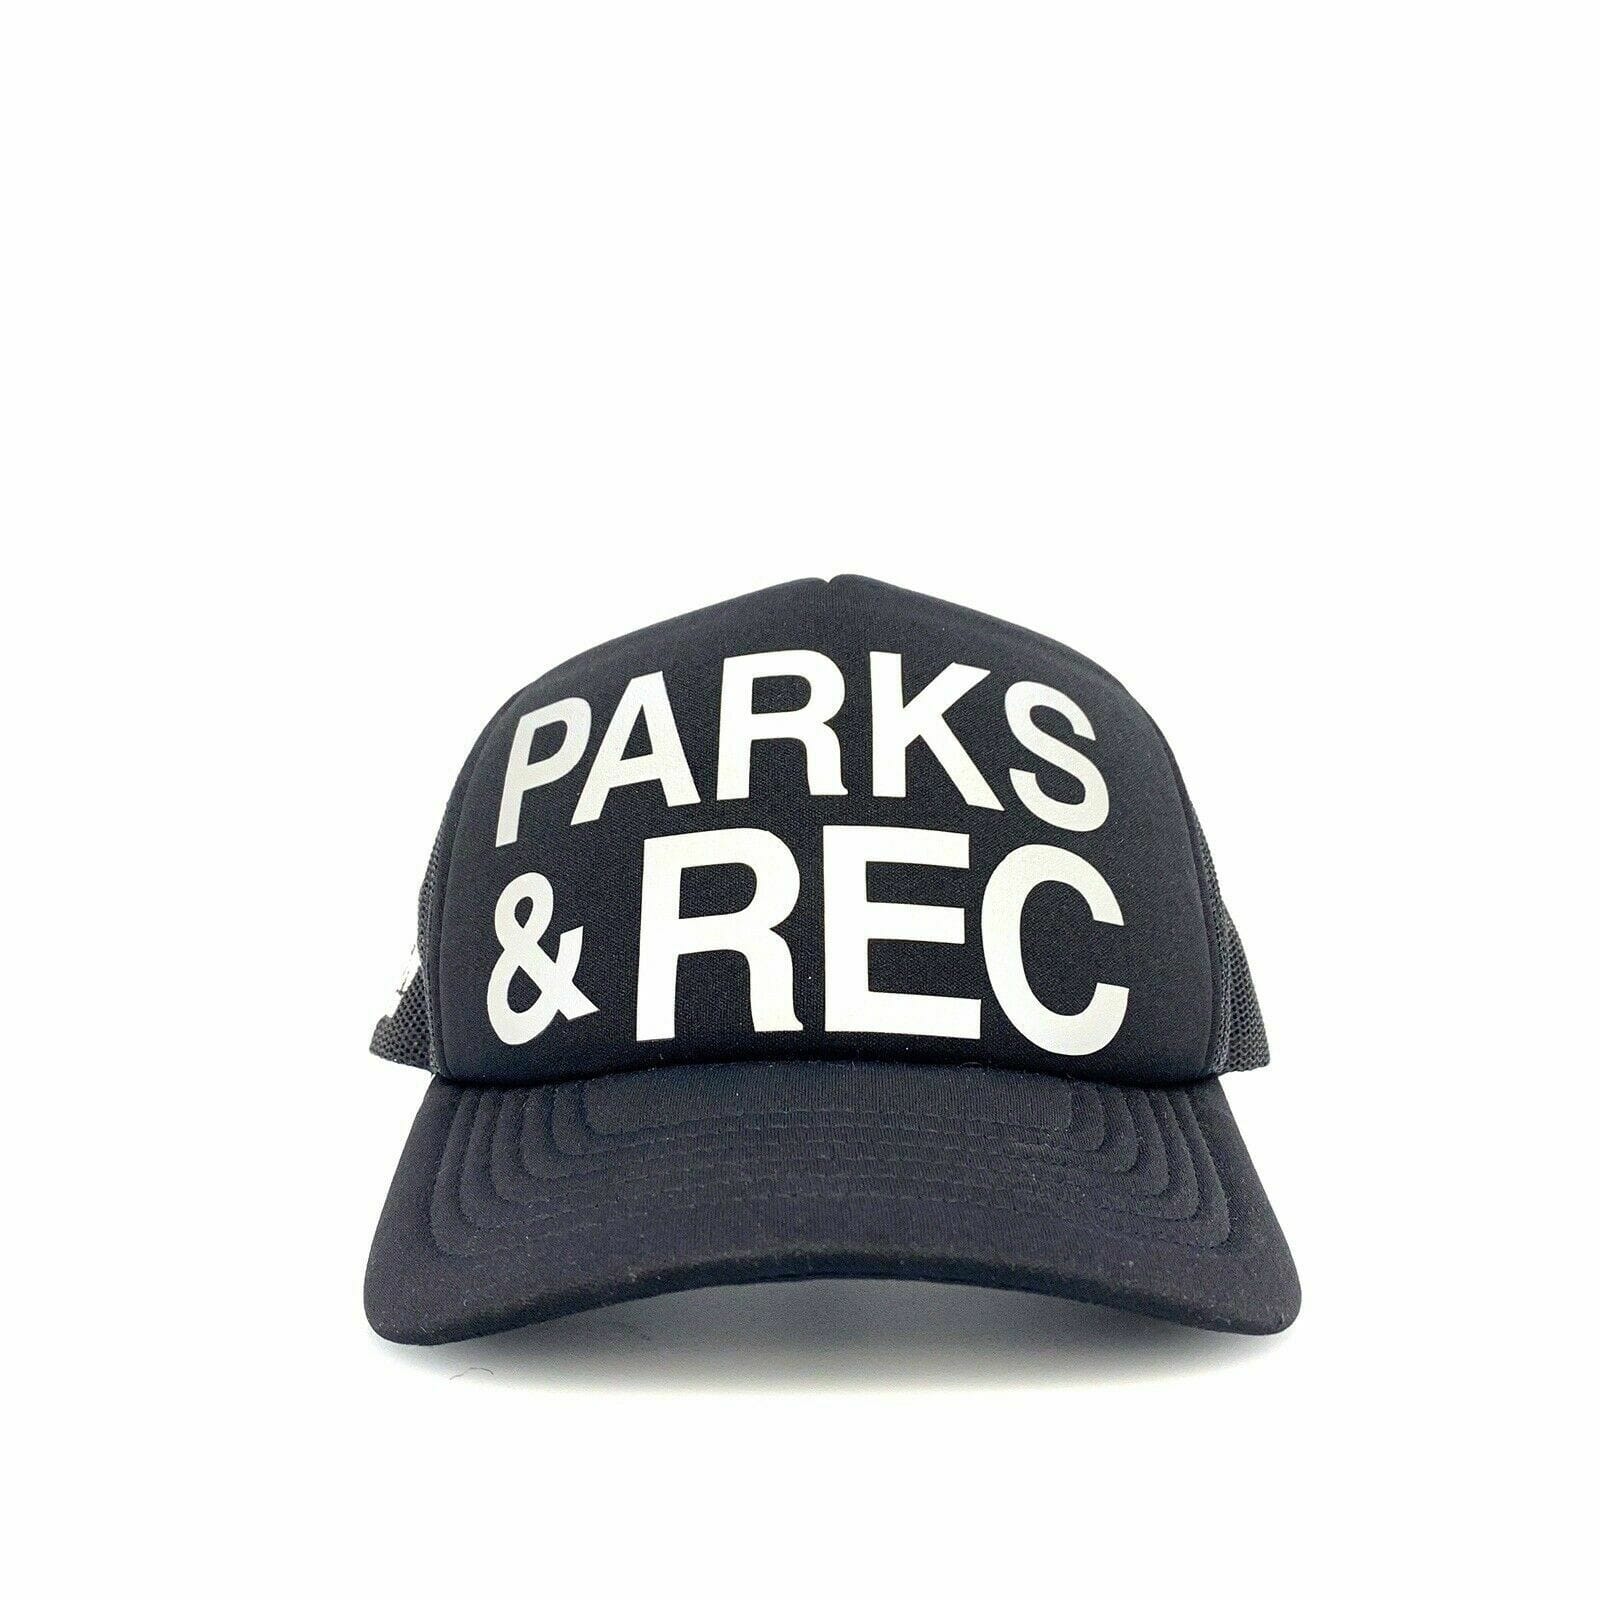 Aspen Recreation Mens Foam “Parks & Rec” SnapBack Trucker Hat, Black - OSFA - parsimonyshoppes